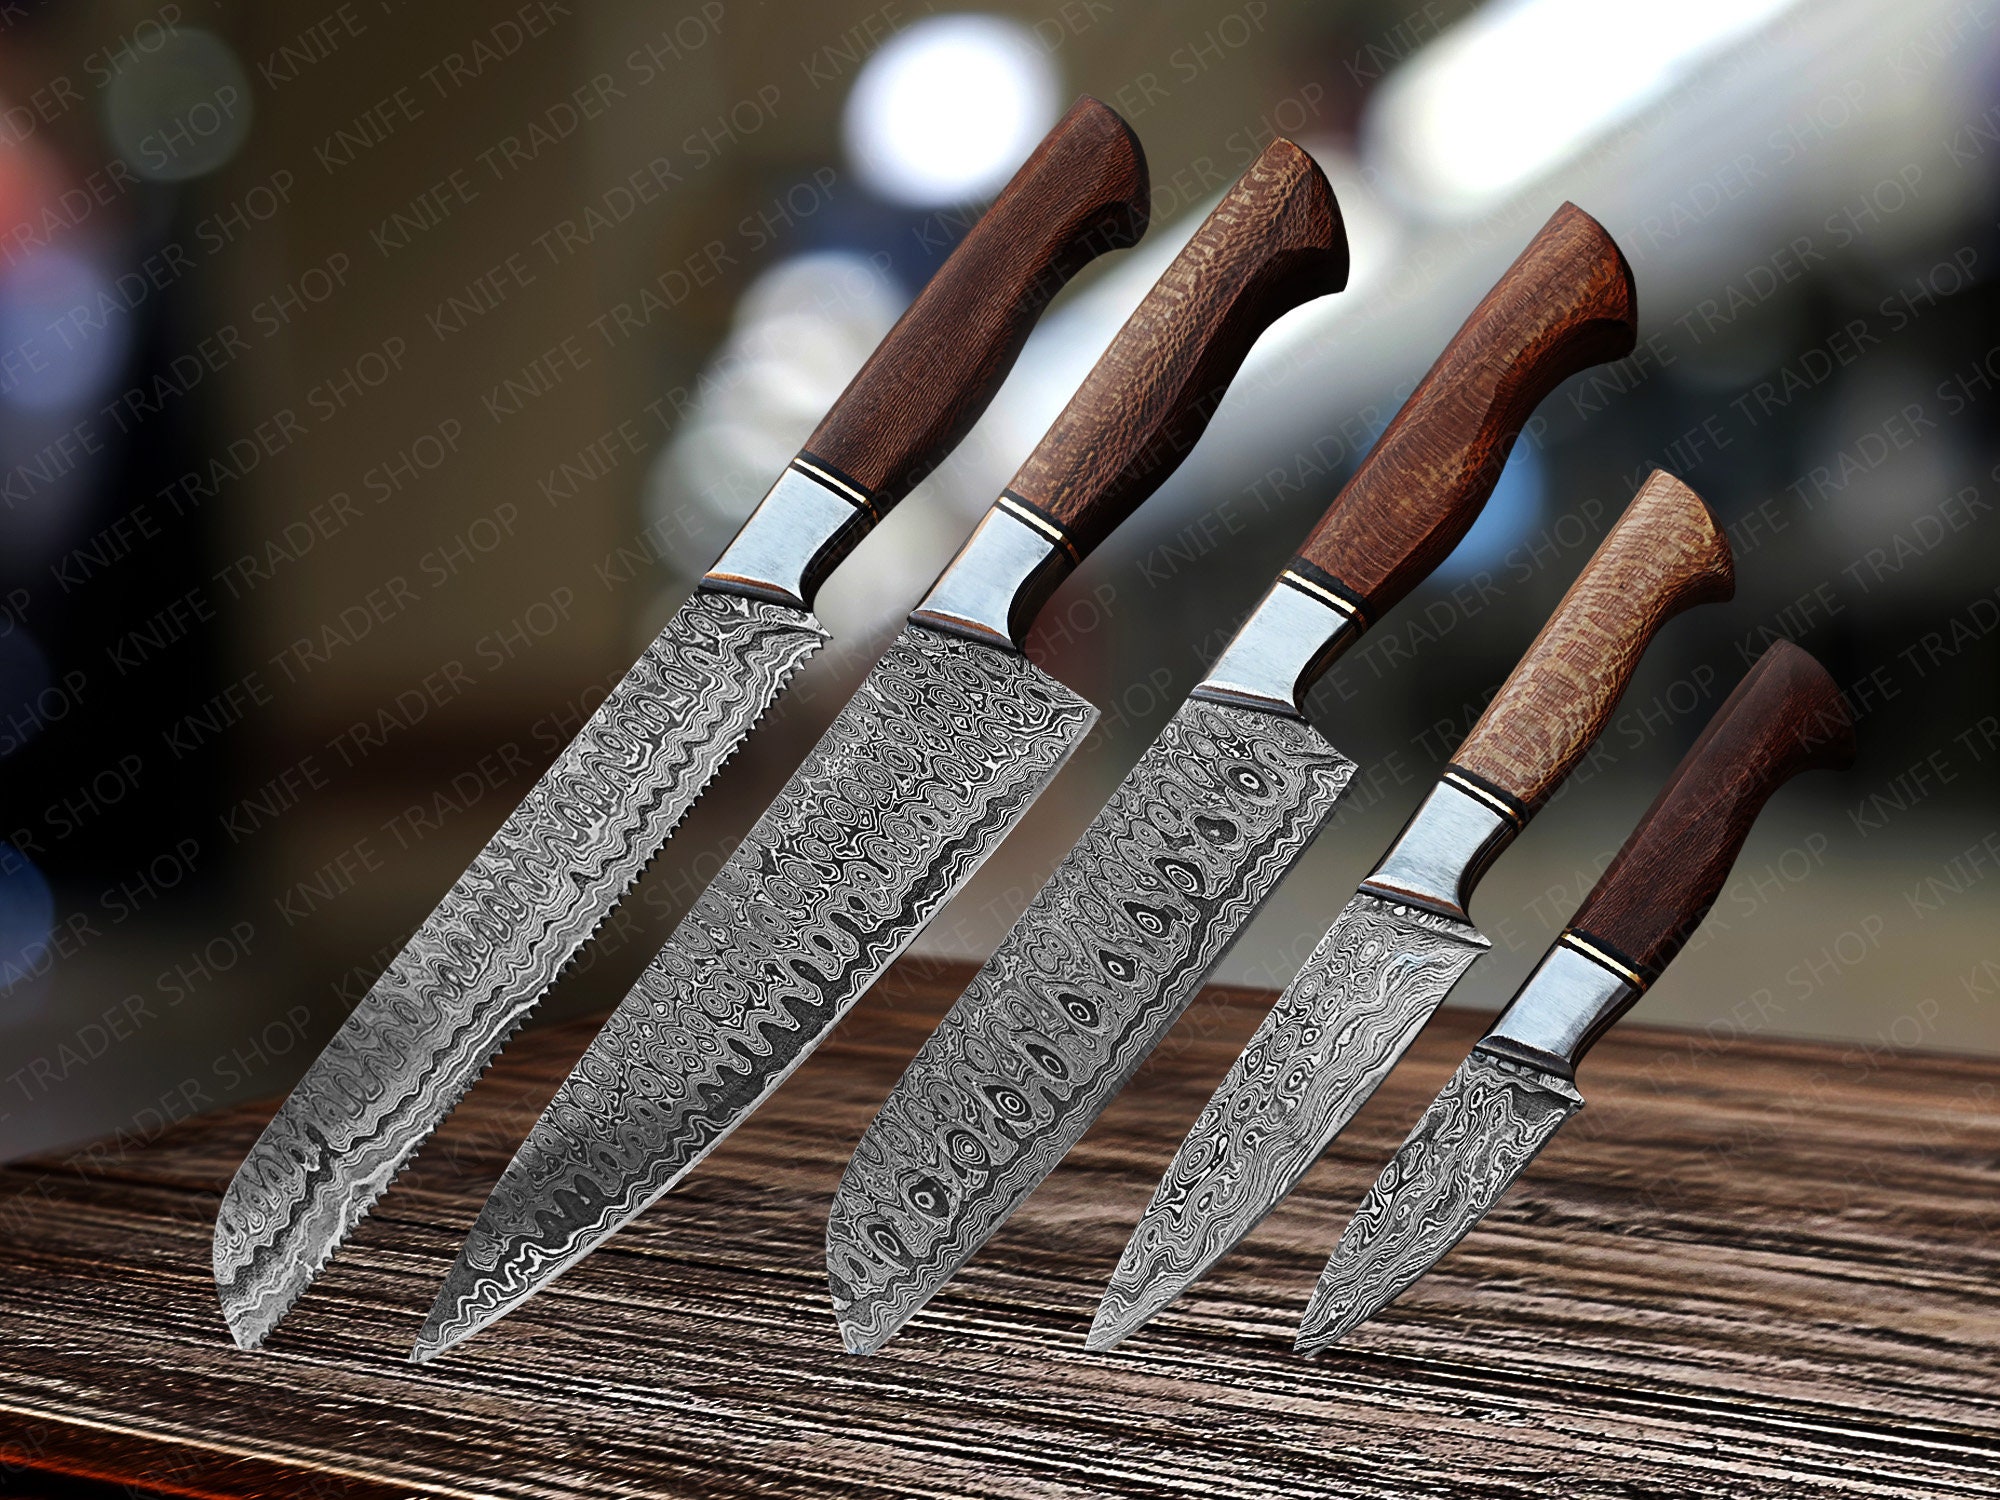 Ultimate Chef Knife Damascus Steel Blades Handmade - Etsy